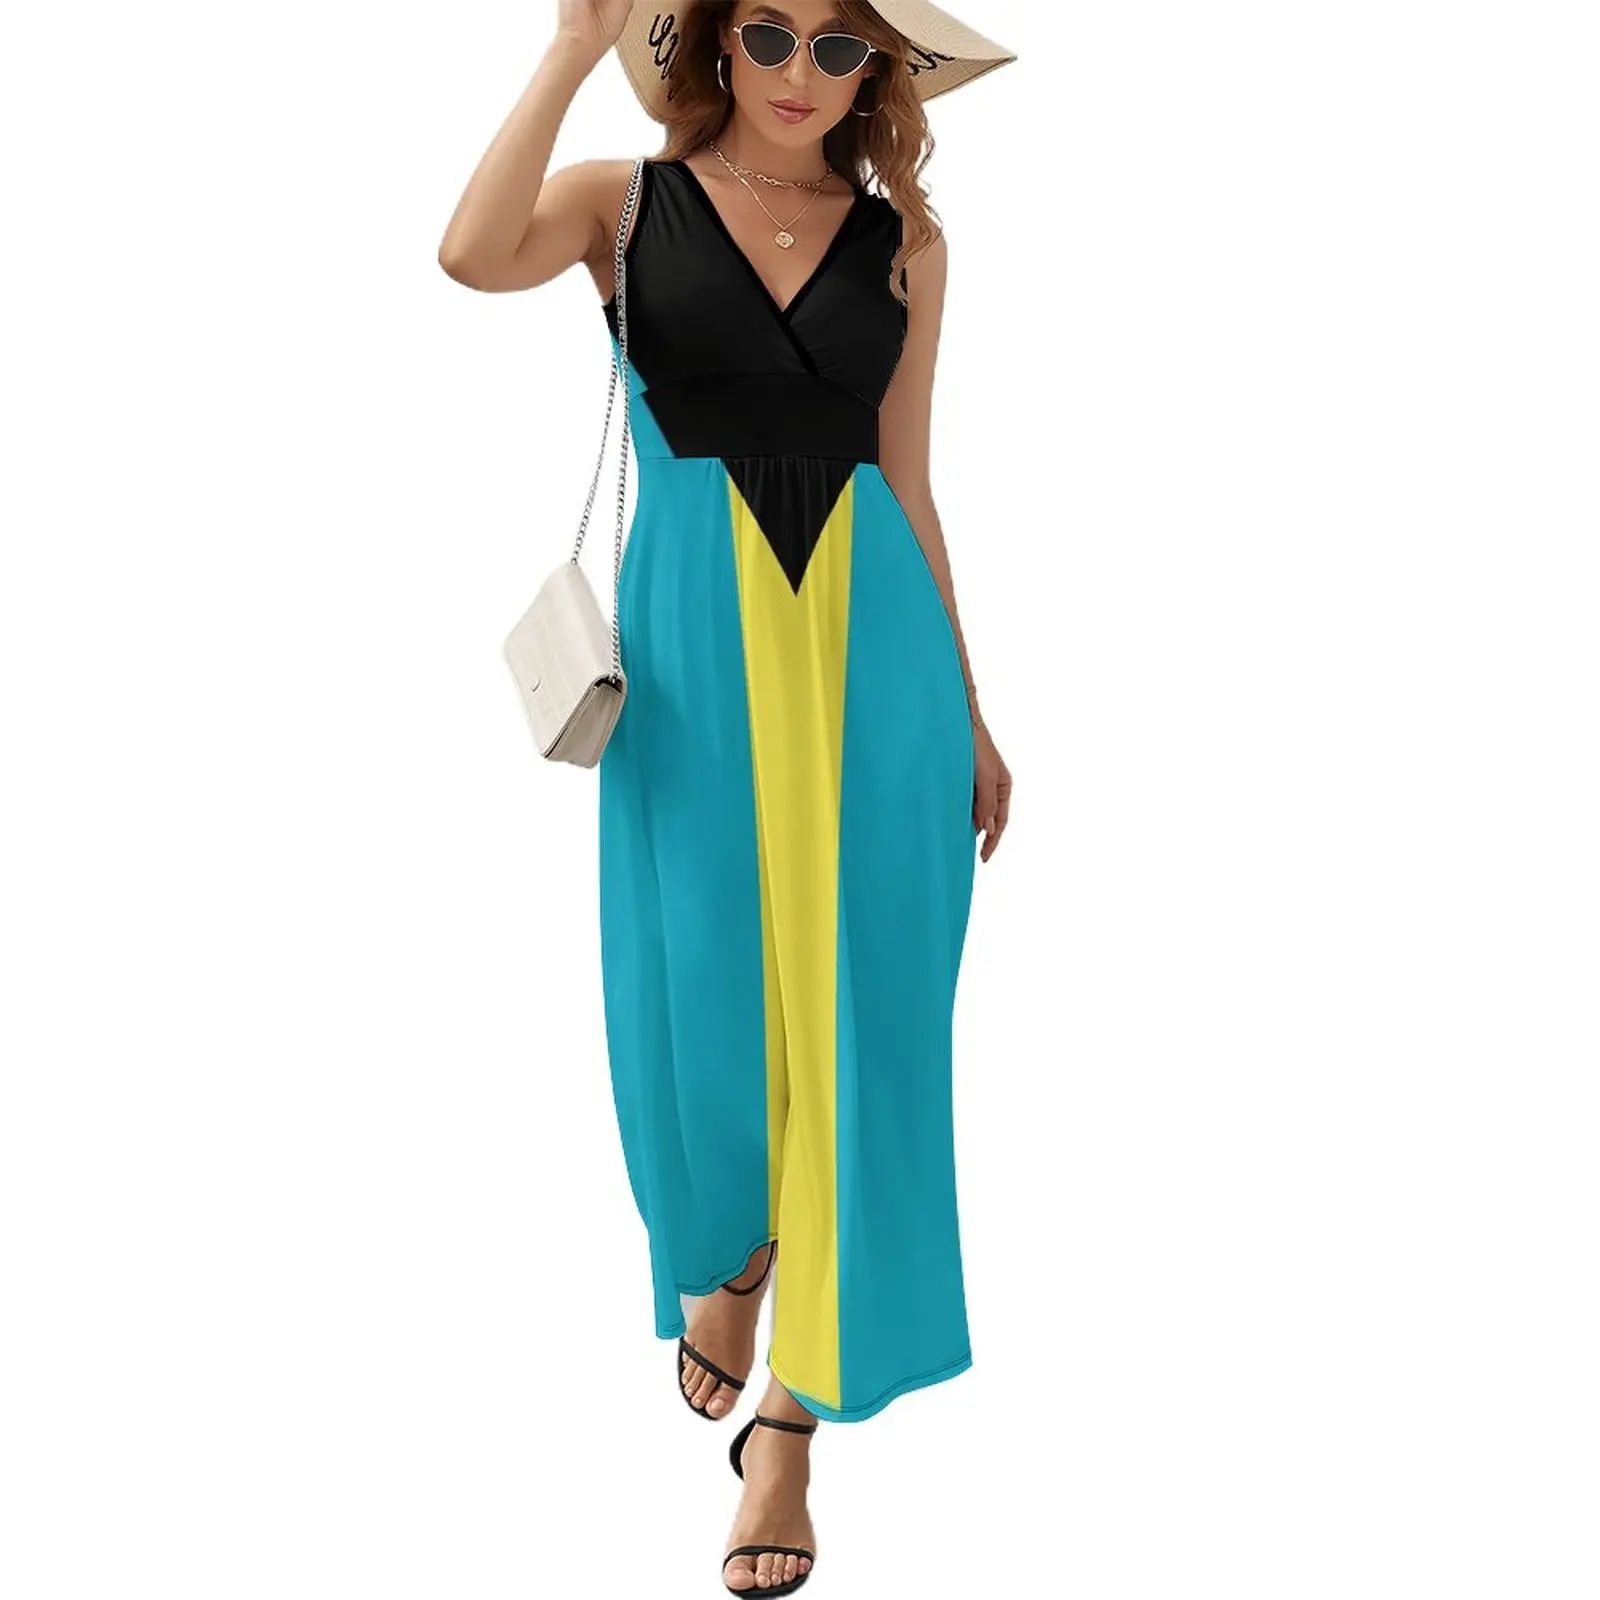 Bahamas National Flag Sleeveless Dress women's luxury party dress dress for women summer